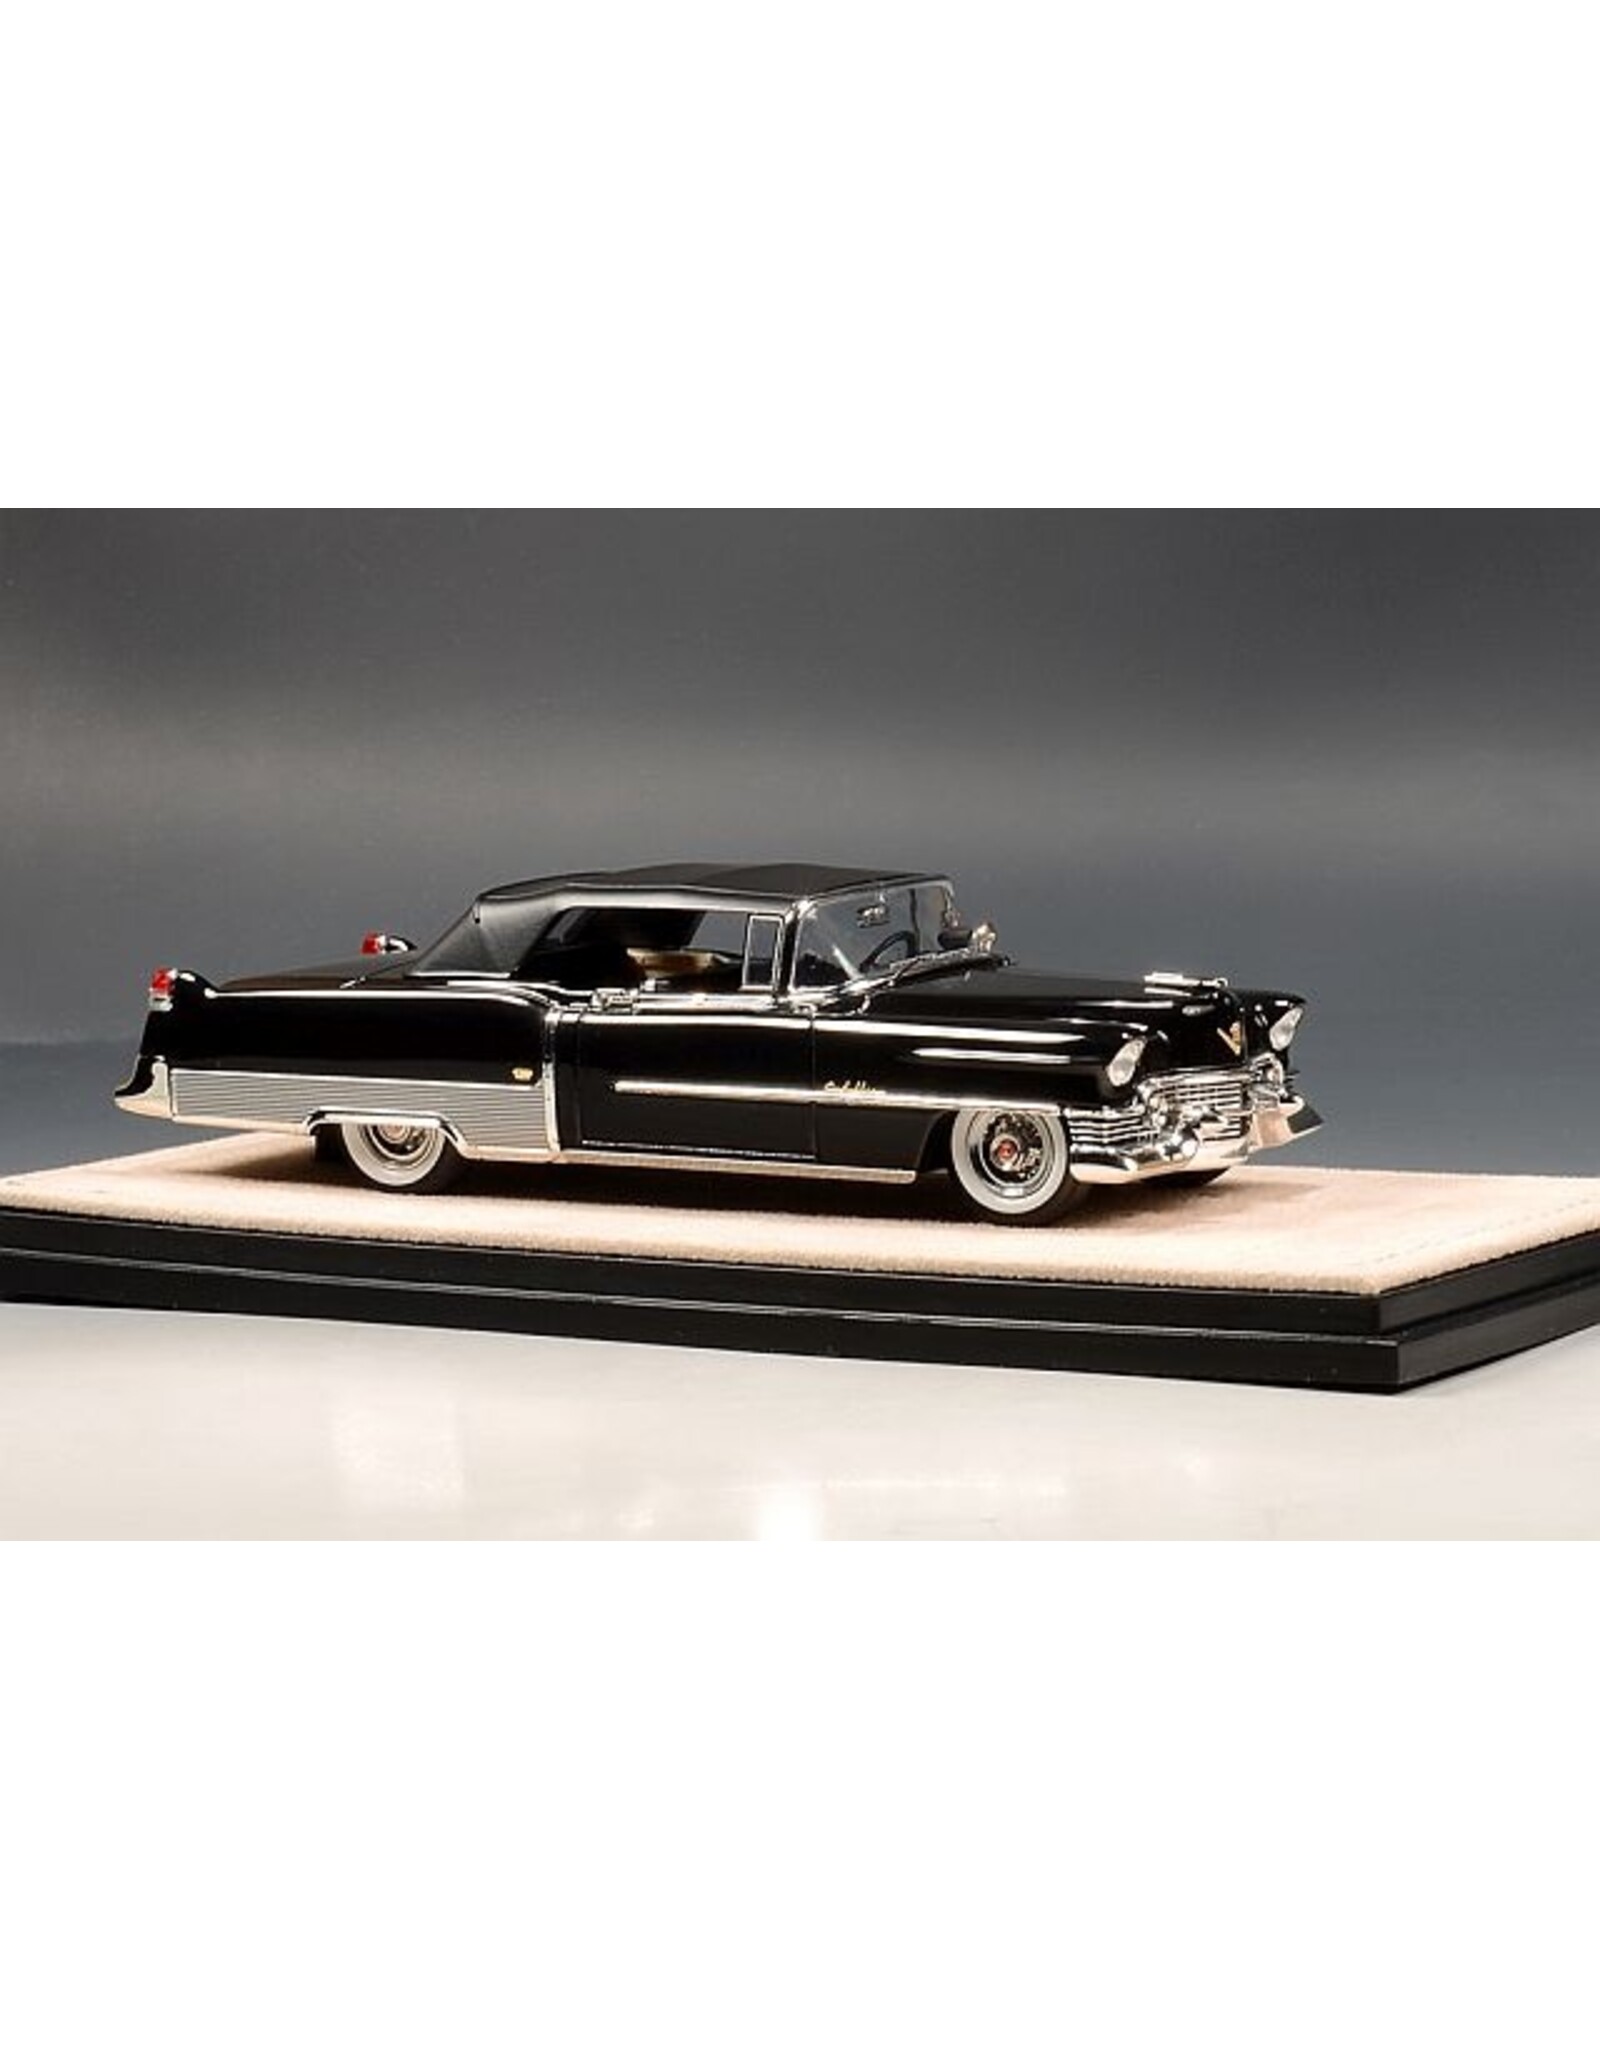 Cadillac(General Motors) Cadillac Eldorado Convertible(1954)closed roof(black)